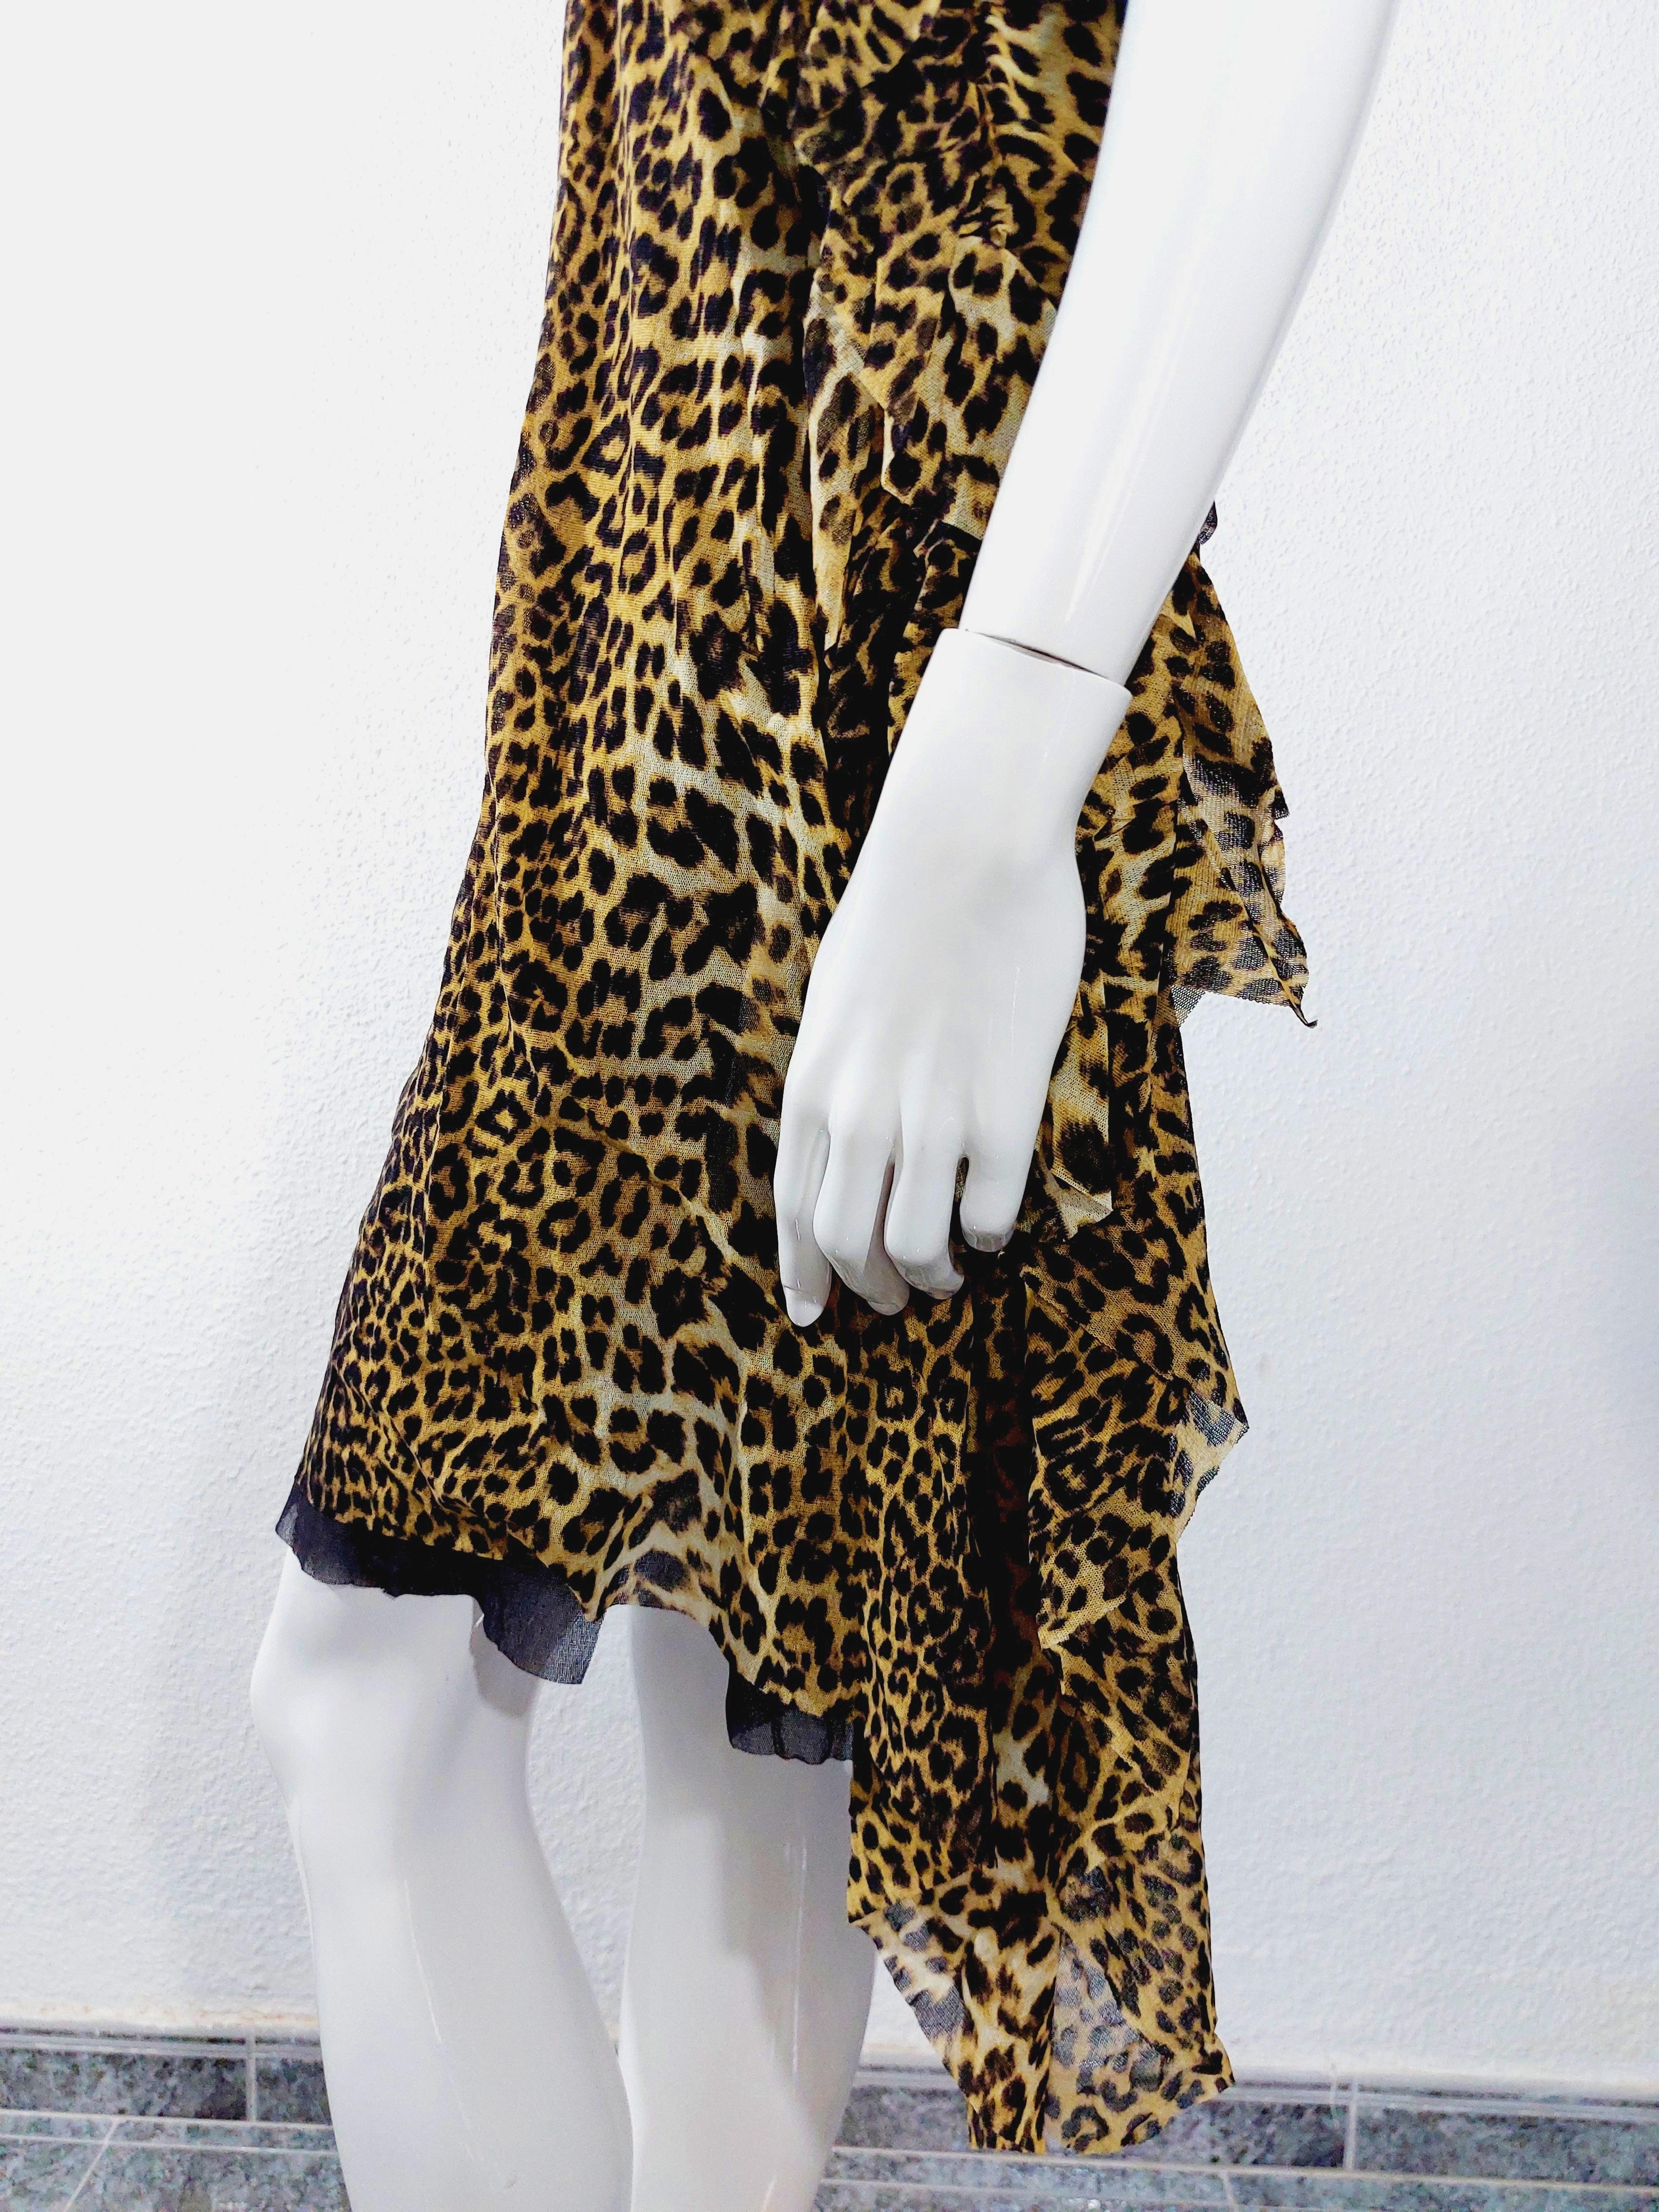 Jean Paul Gaultier 1990s Leopard Asymmetrical Cheetah Animal Mesh Ruffled Dress For Sale 5